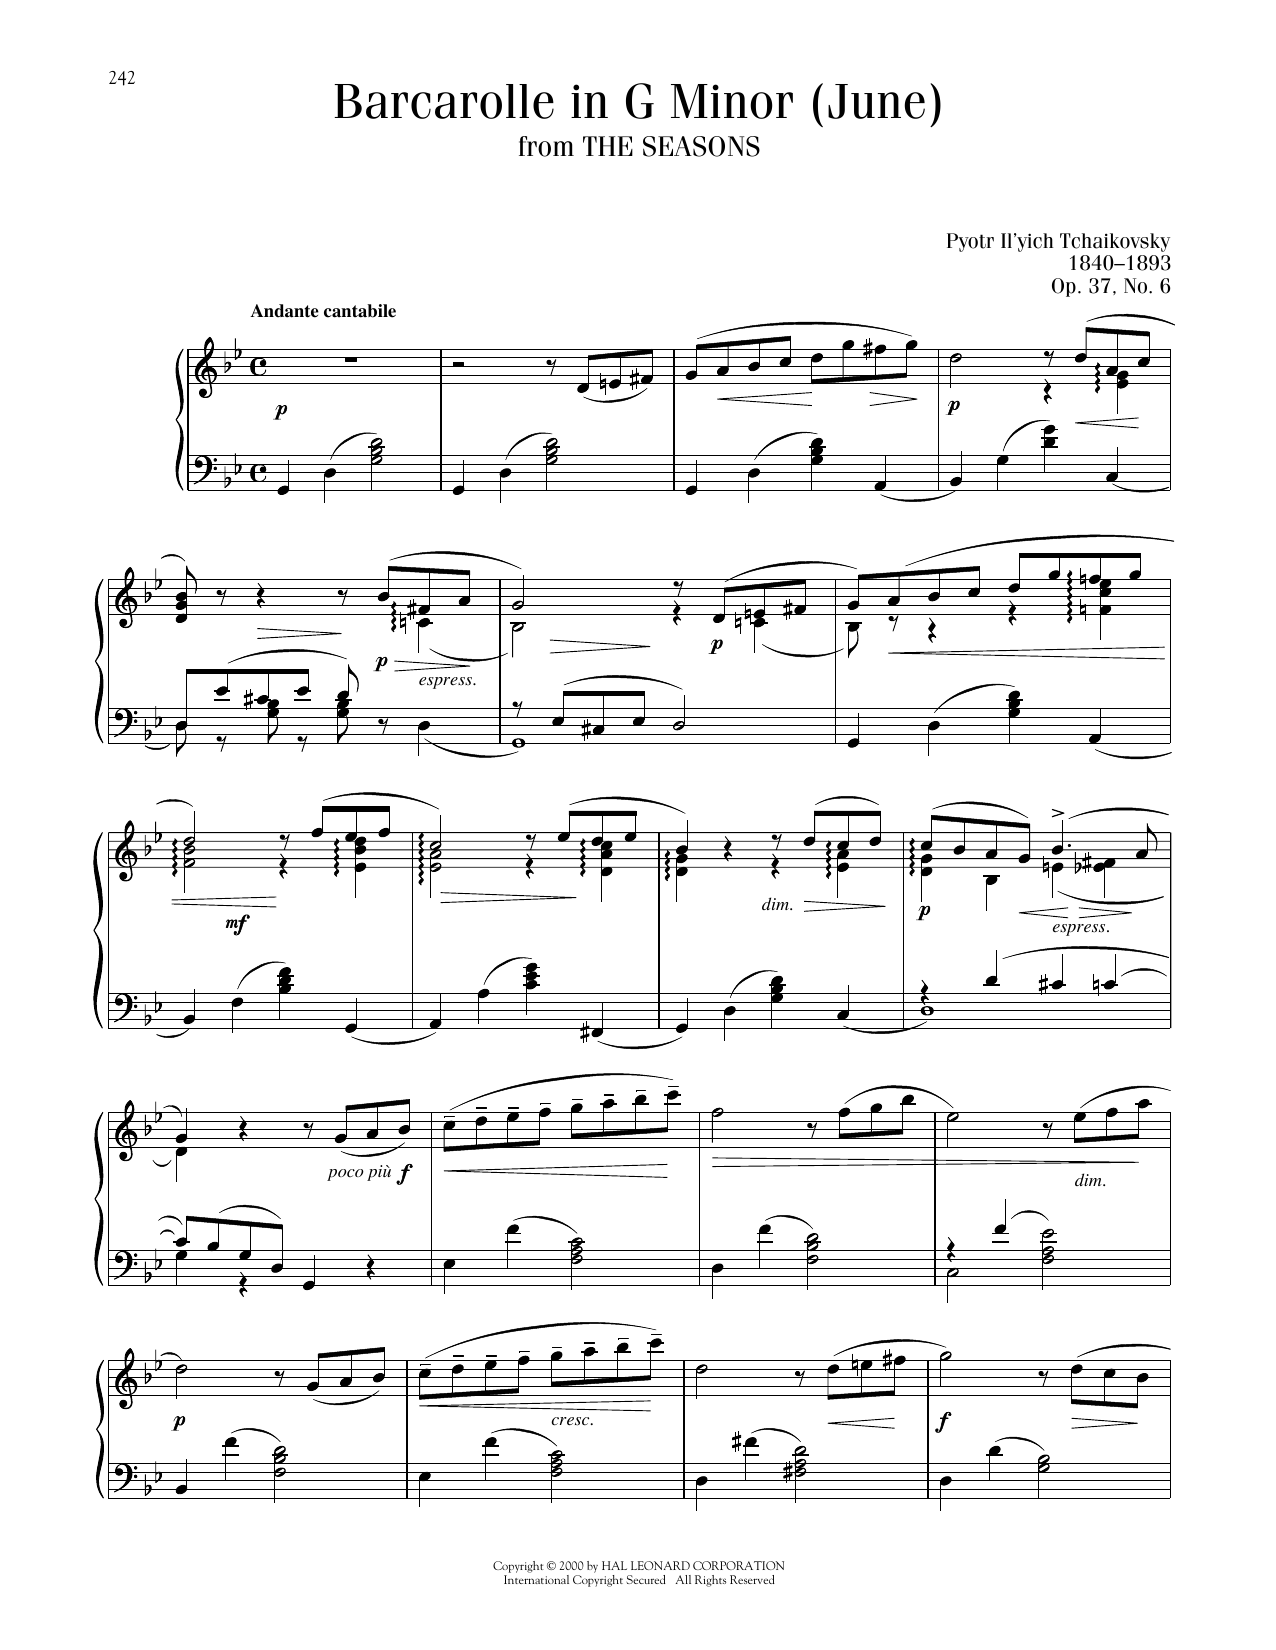 Pyotr Il'yich Tchaikovsky June: Barcarolle, Op. 37a/b sheet music notes printable PDF score